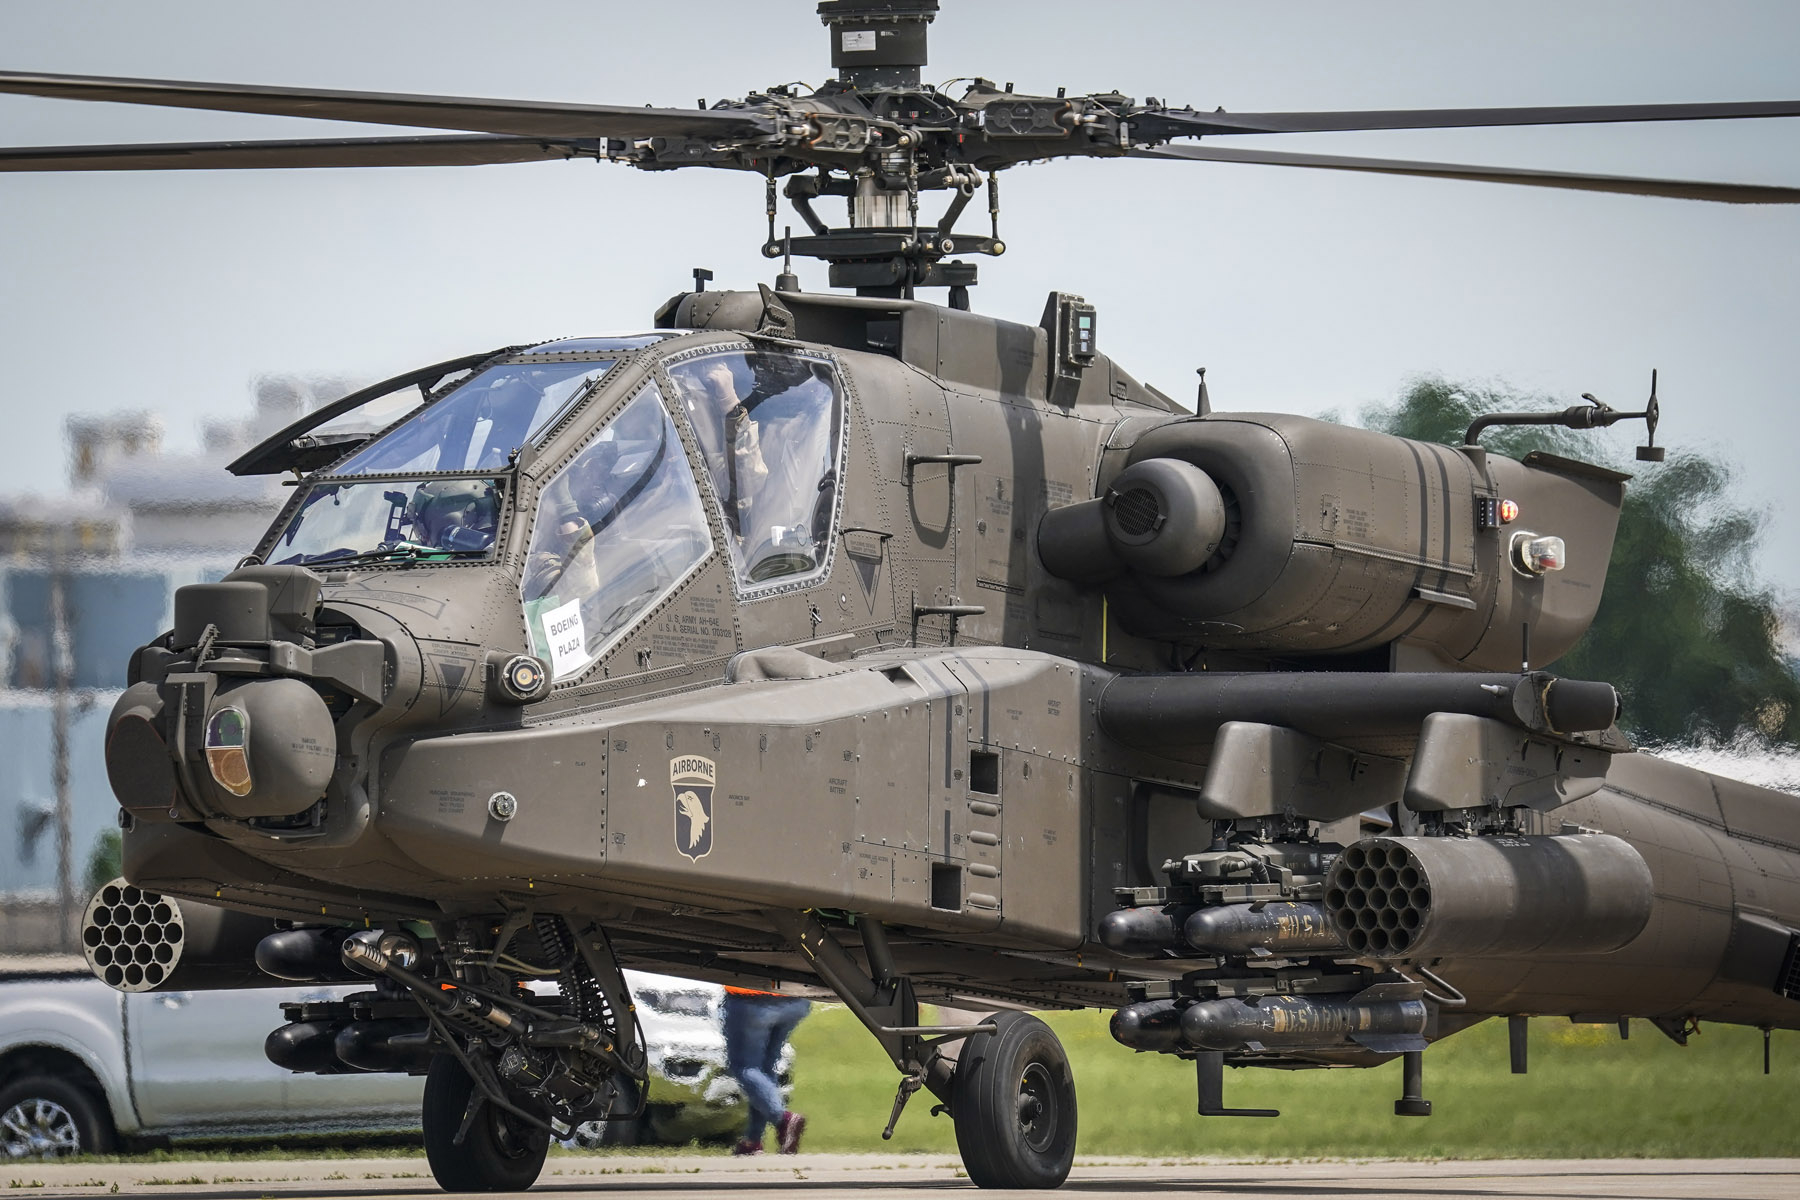 An AH-64E Apache helicopter